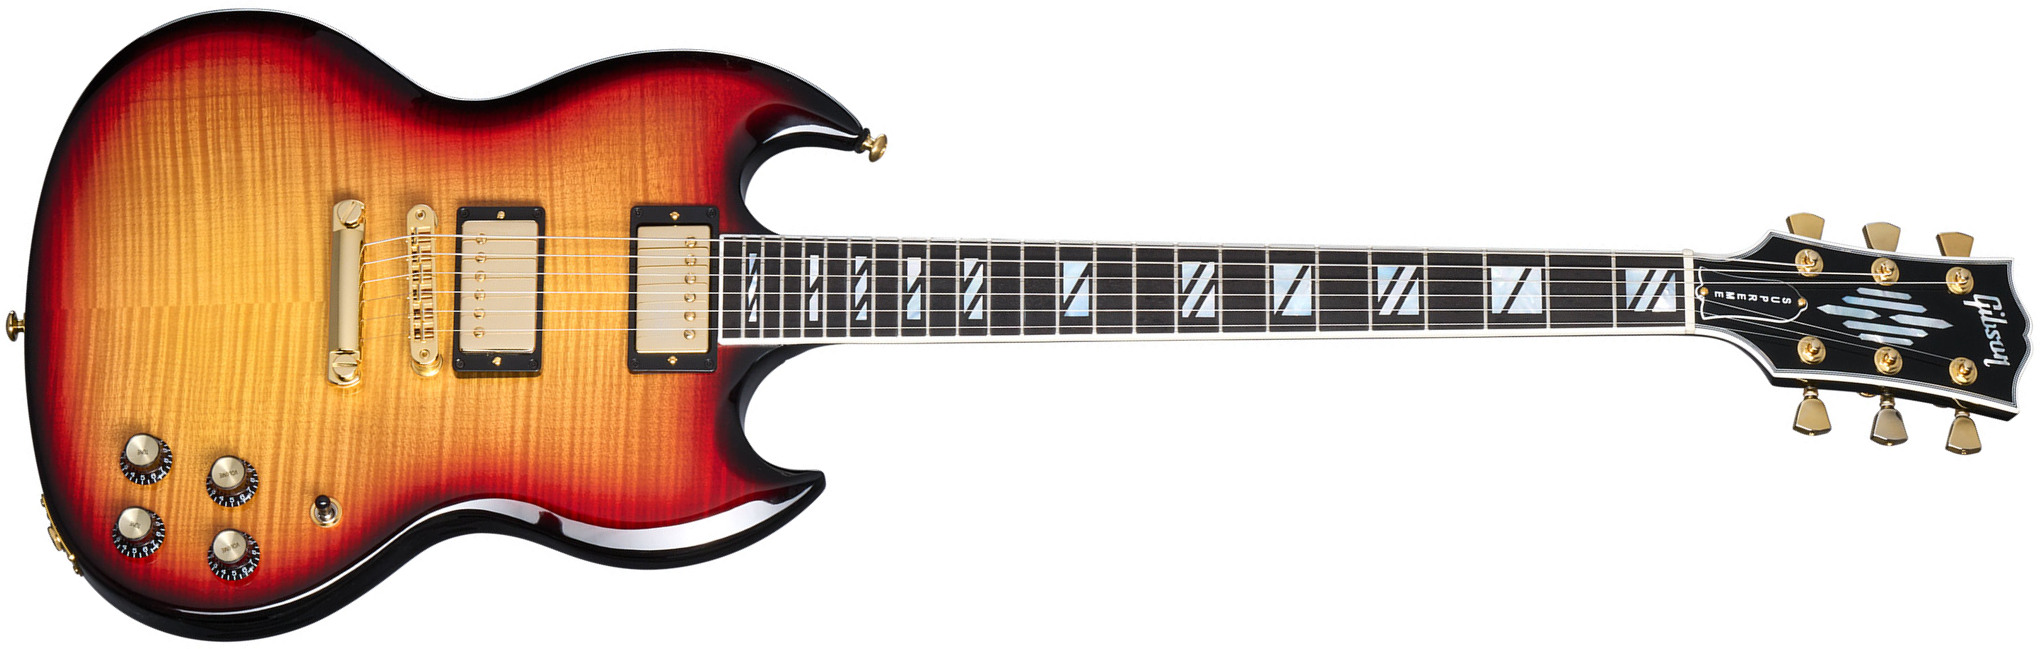 Gibson Sg Supreme Usa 2h Ht Rw - Fireburst - Double cut electric guitar - Main picture